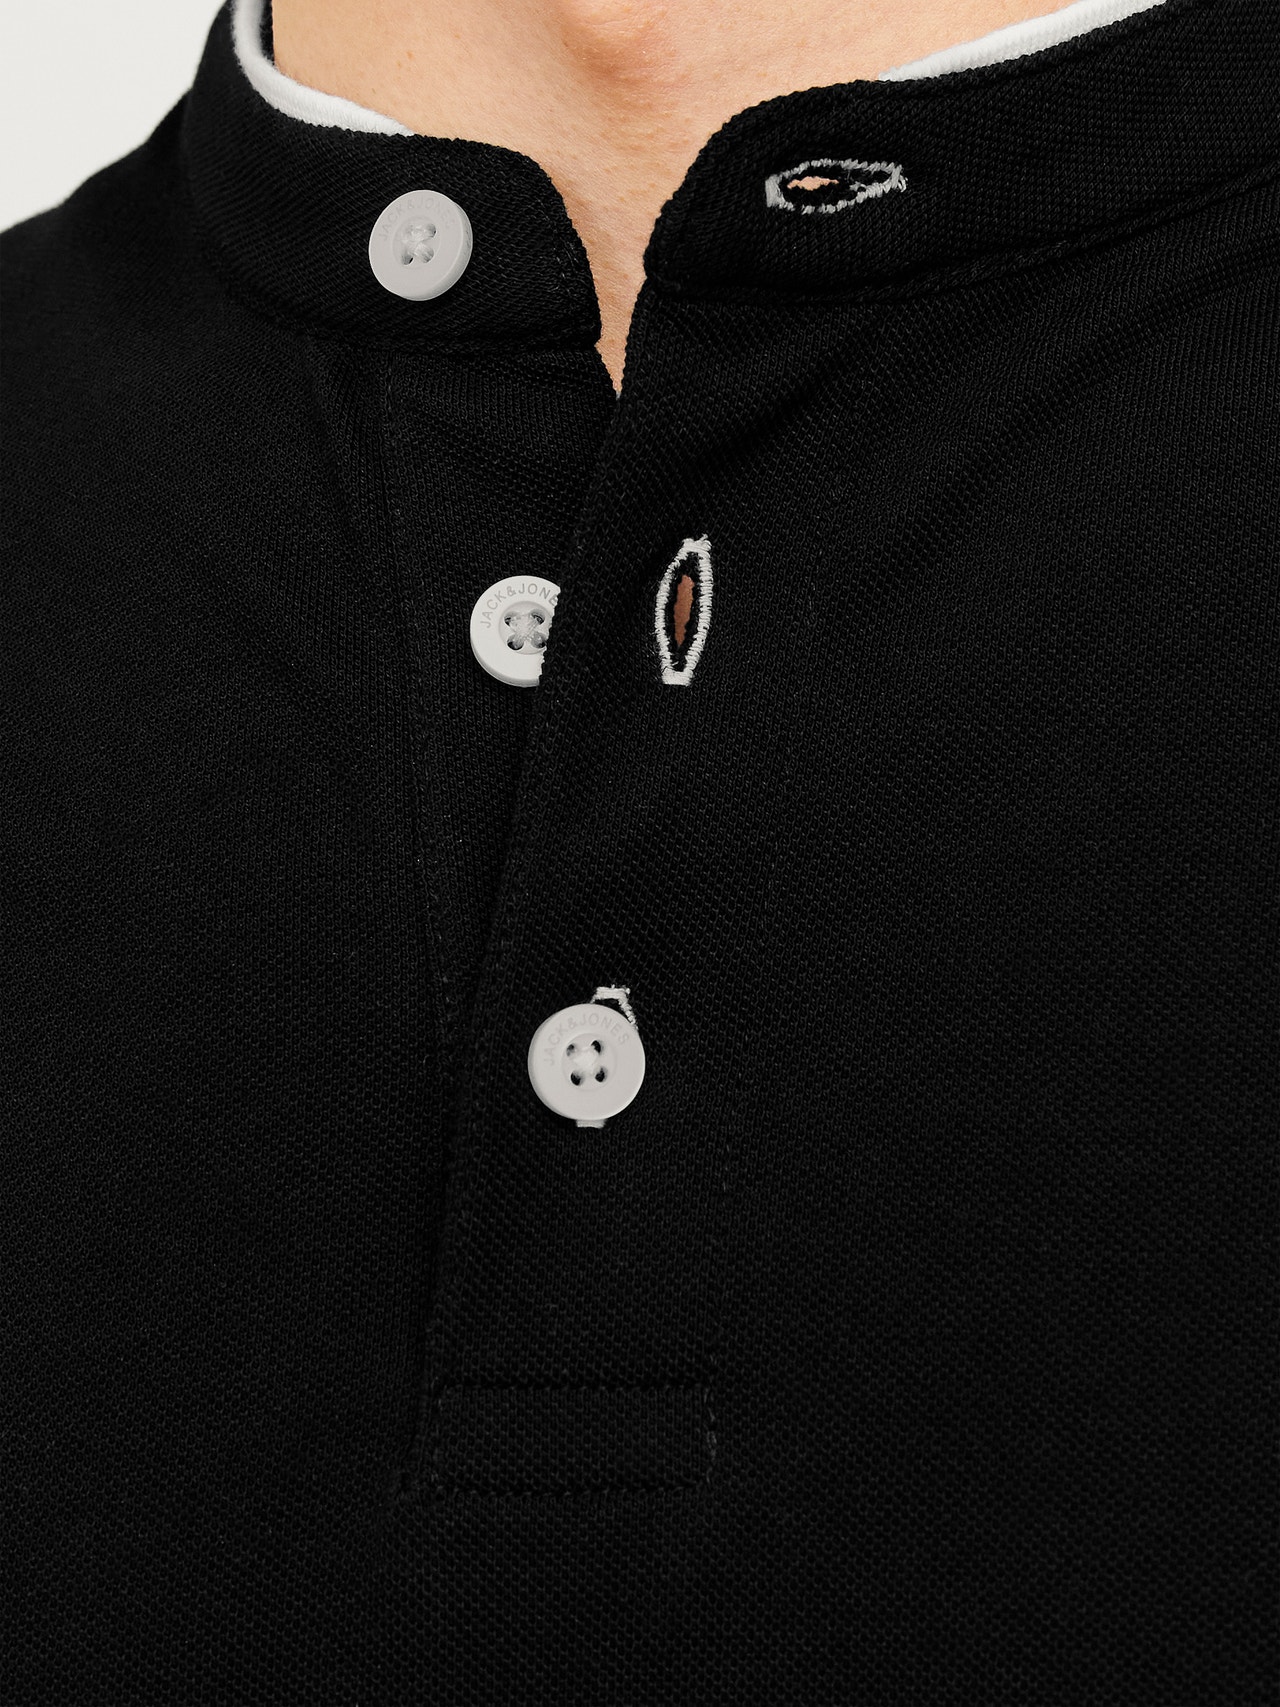 Jack & Jones Gładki Polo T-shirt -Black - 12199711